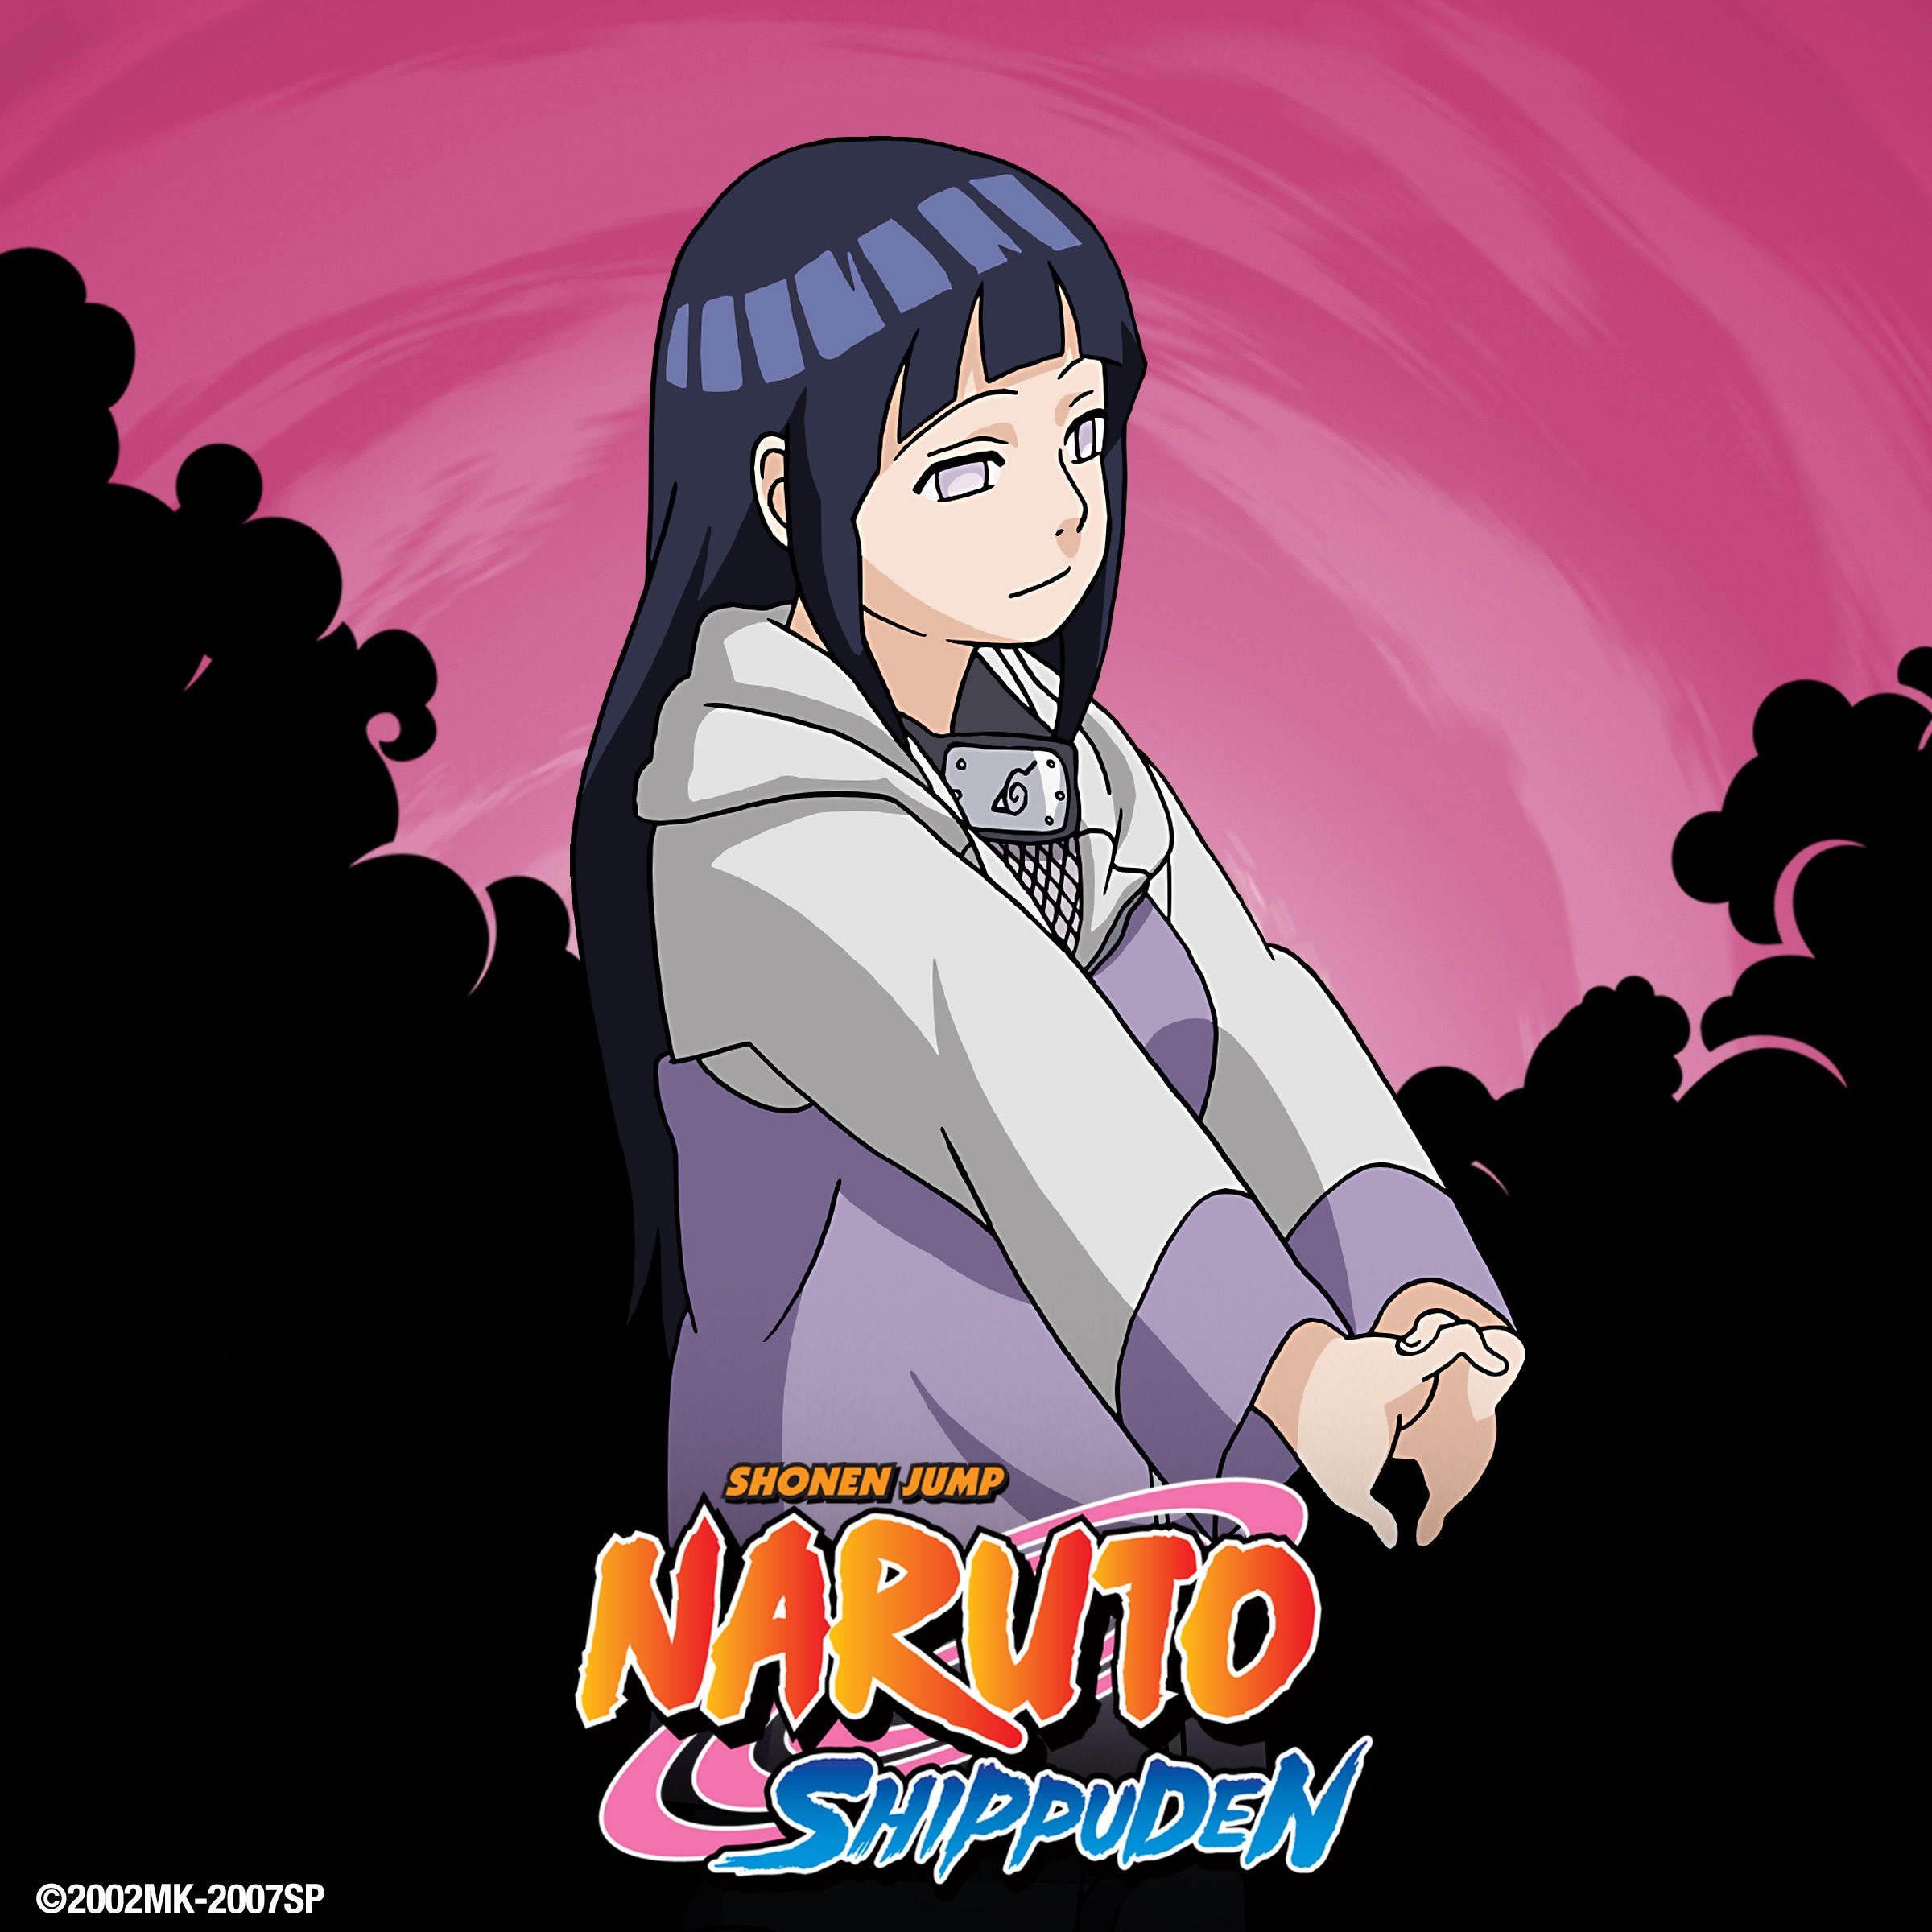 VIZ Watch Naruto Episode 14 for Free